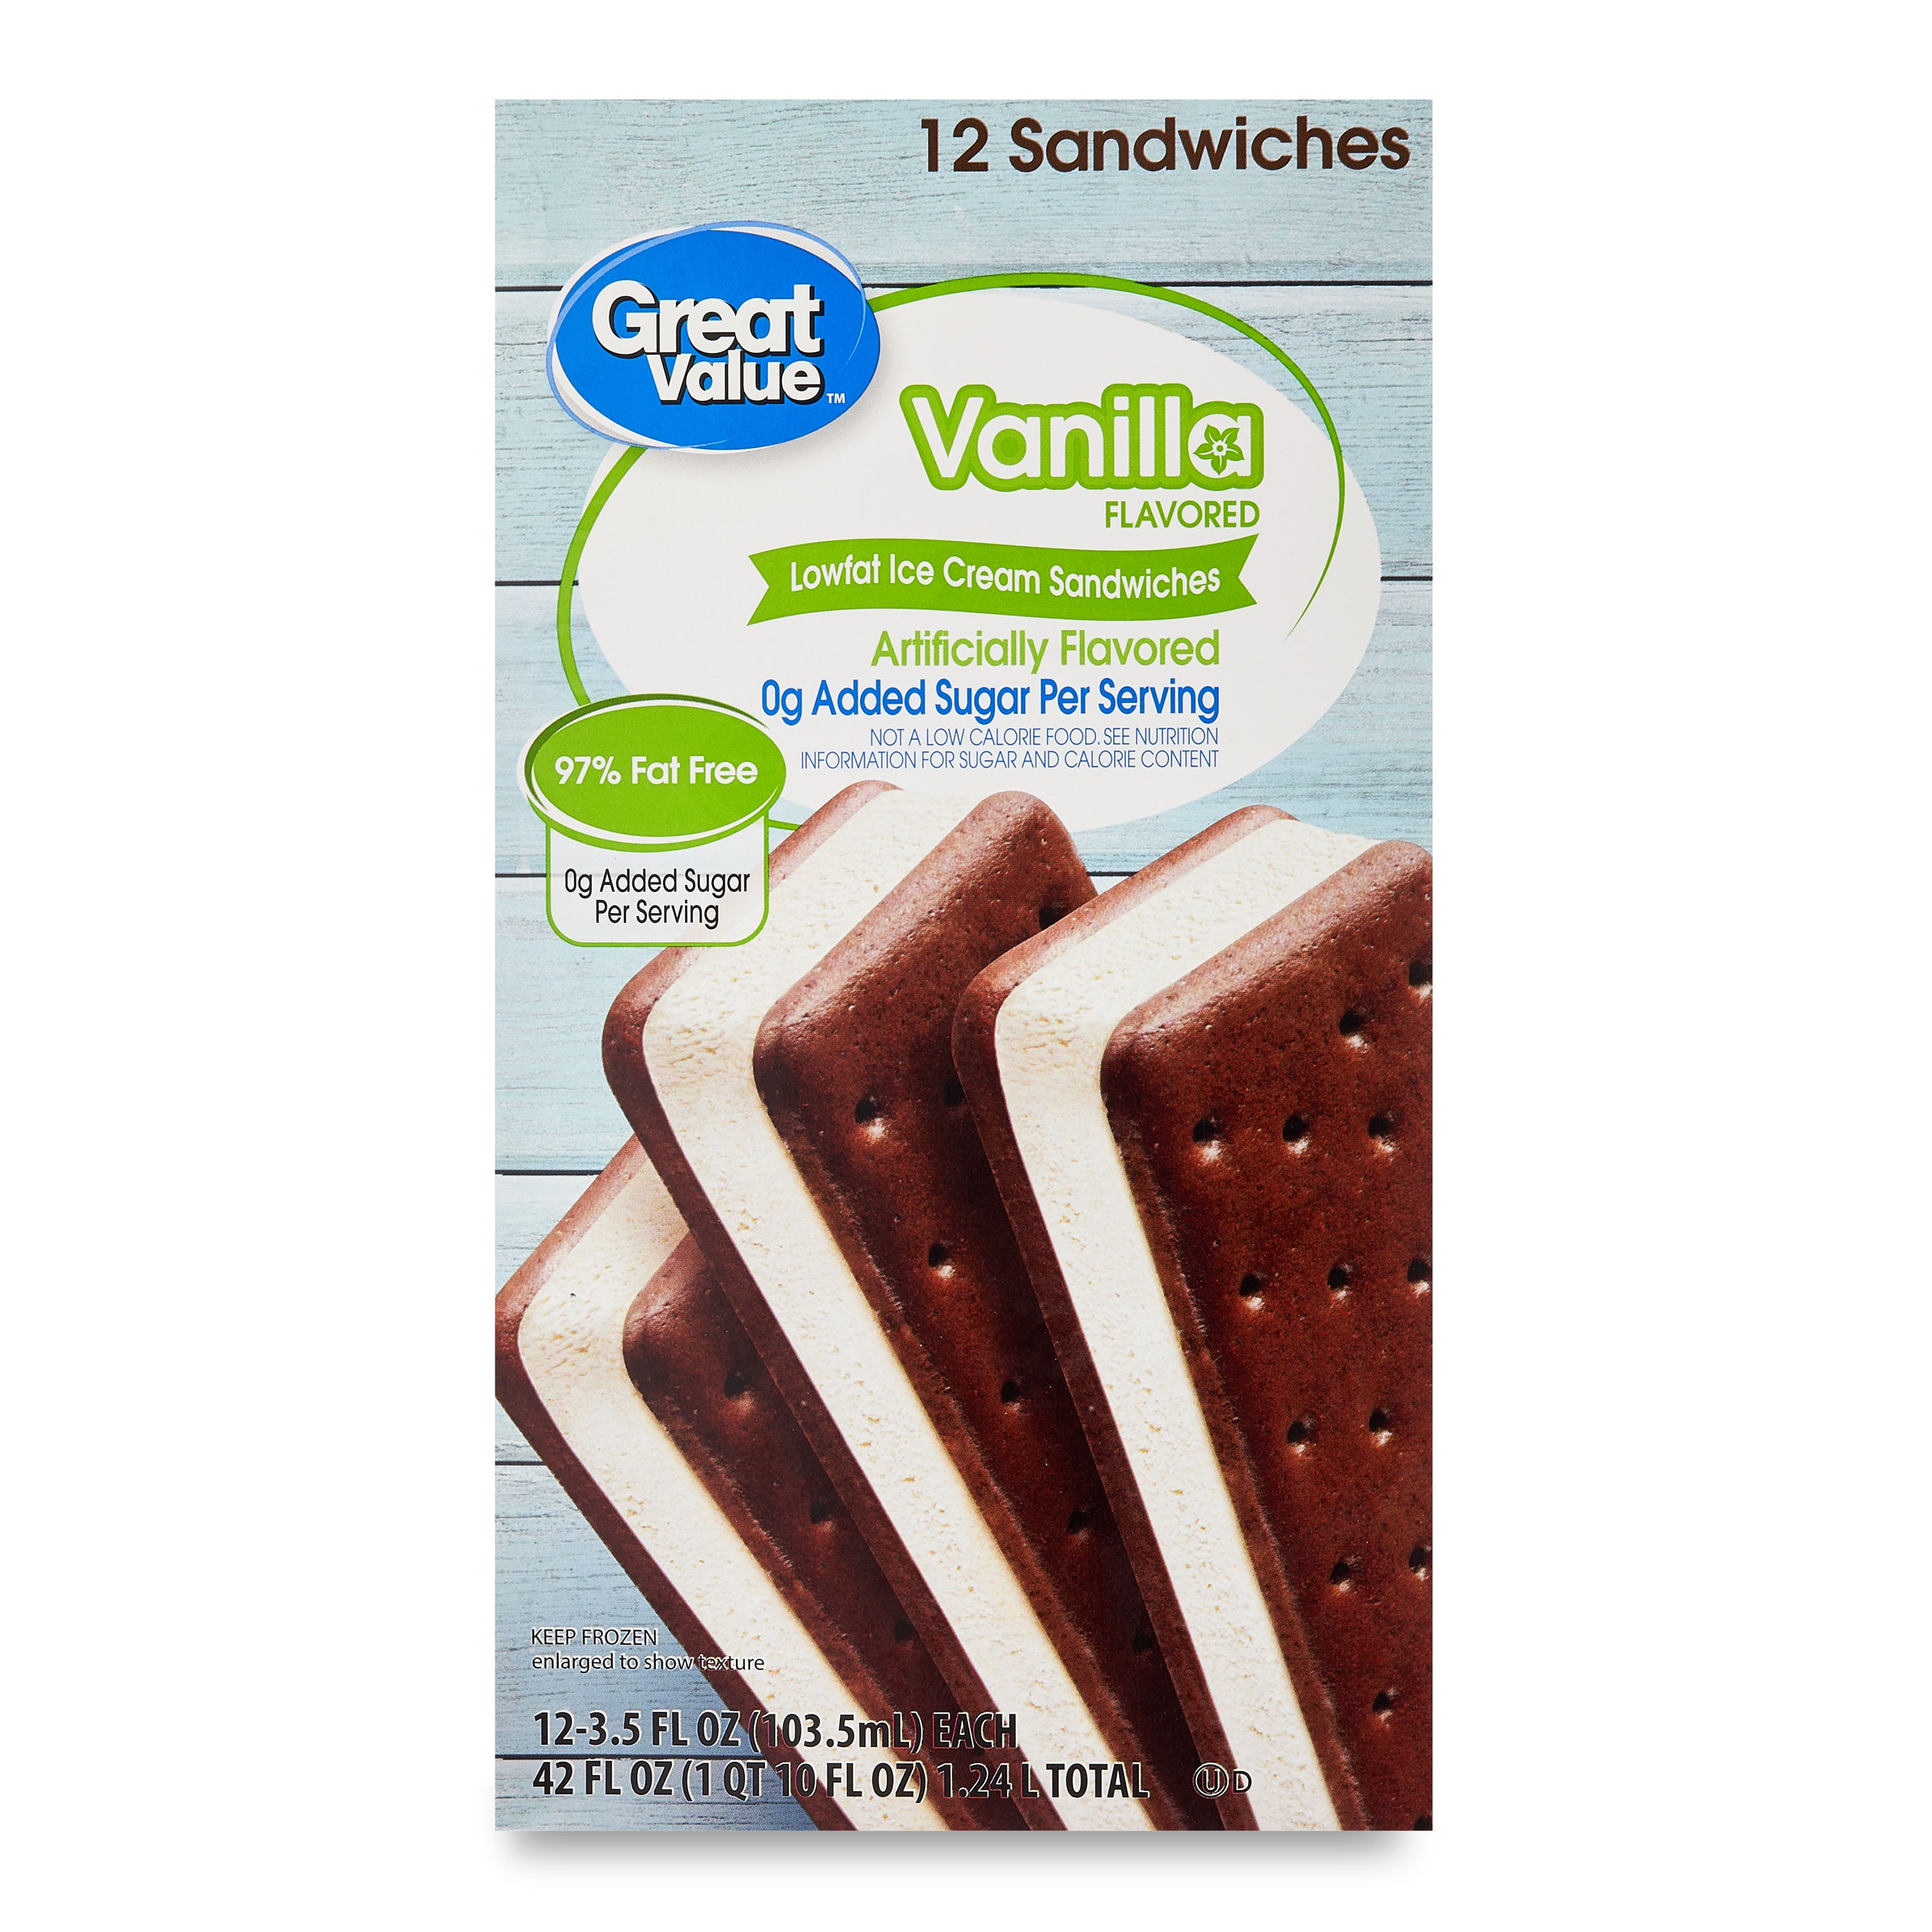 Chemical Guys Vanilla Bean Fresh Scoop Air Freshener Delicious Scent Of  Vanilla Ice Cream